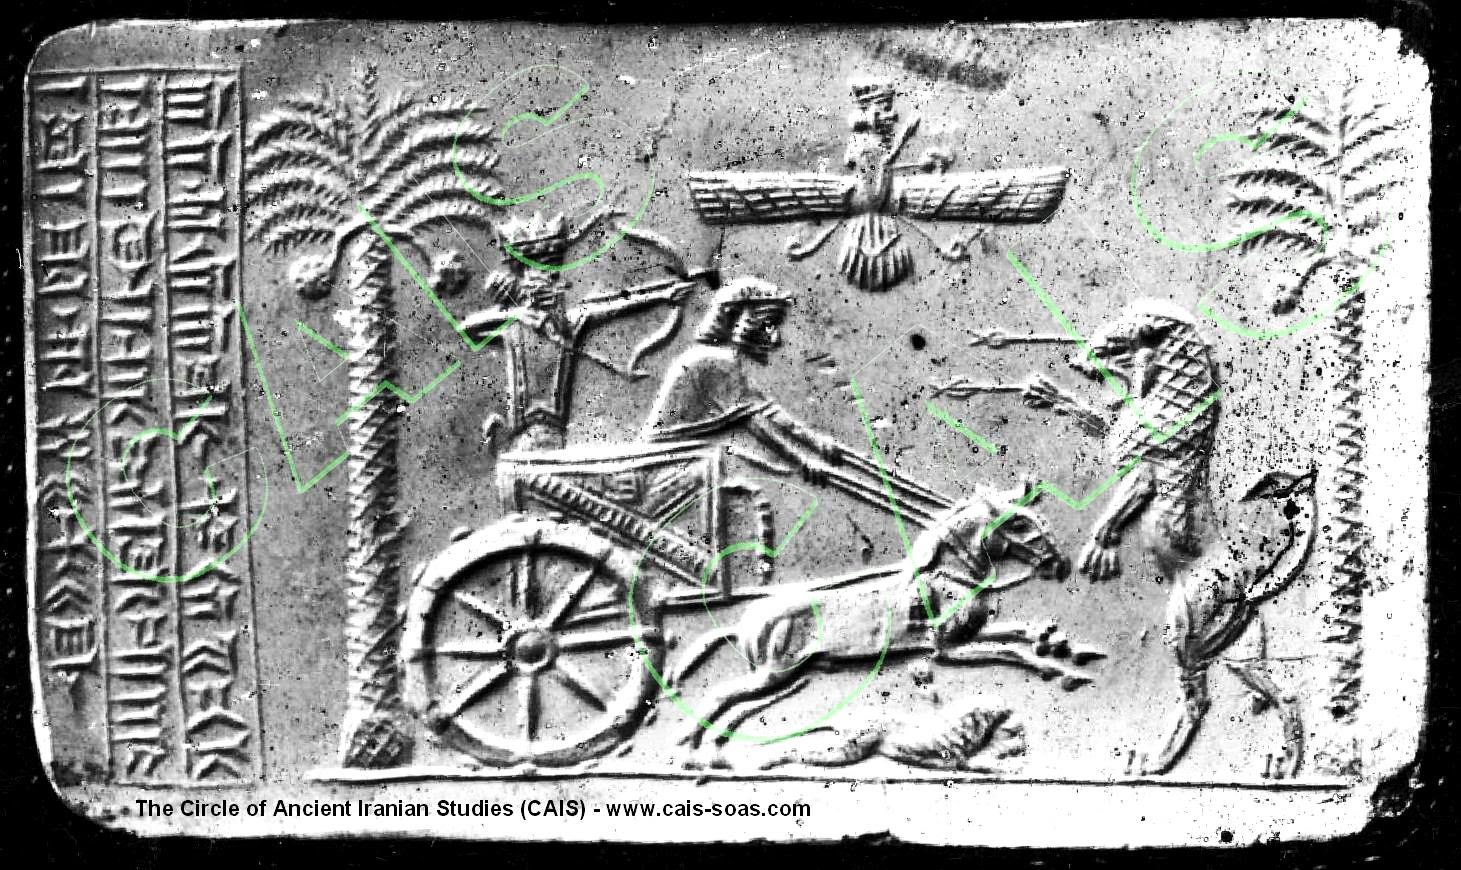 http://www.cais-soas.com/CAIS/Images2/Achaemenid/Artefacts/Seals/Seal_of_Darius_the_GreatWM.JPG